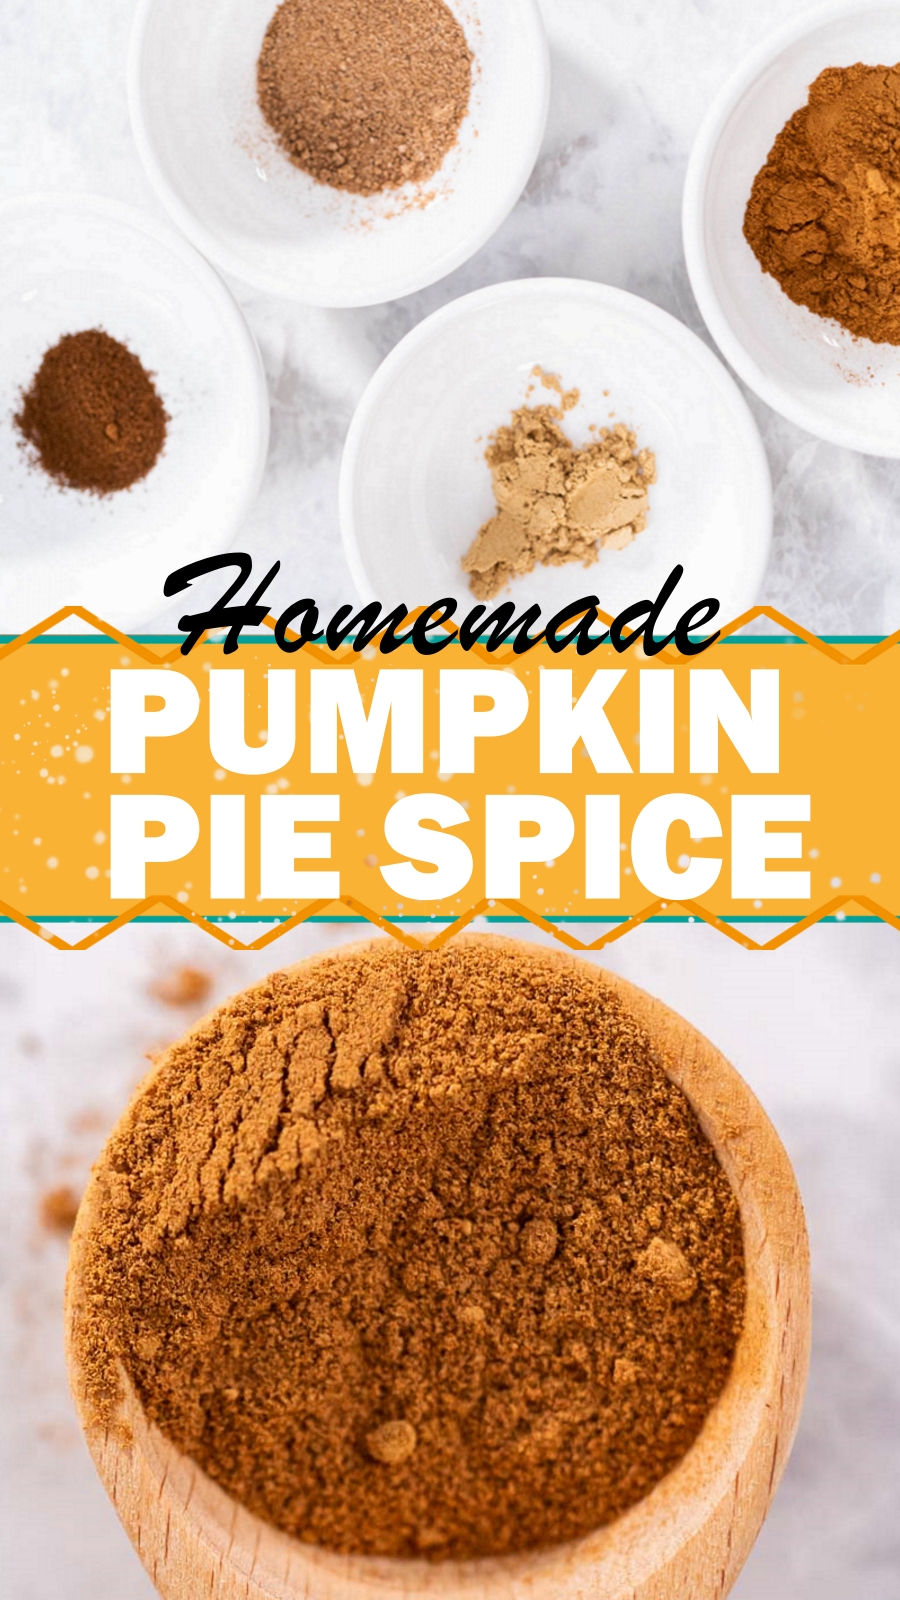 Homemade pumpkin pie spice